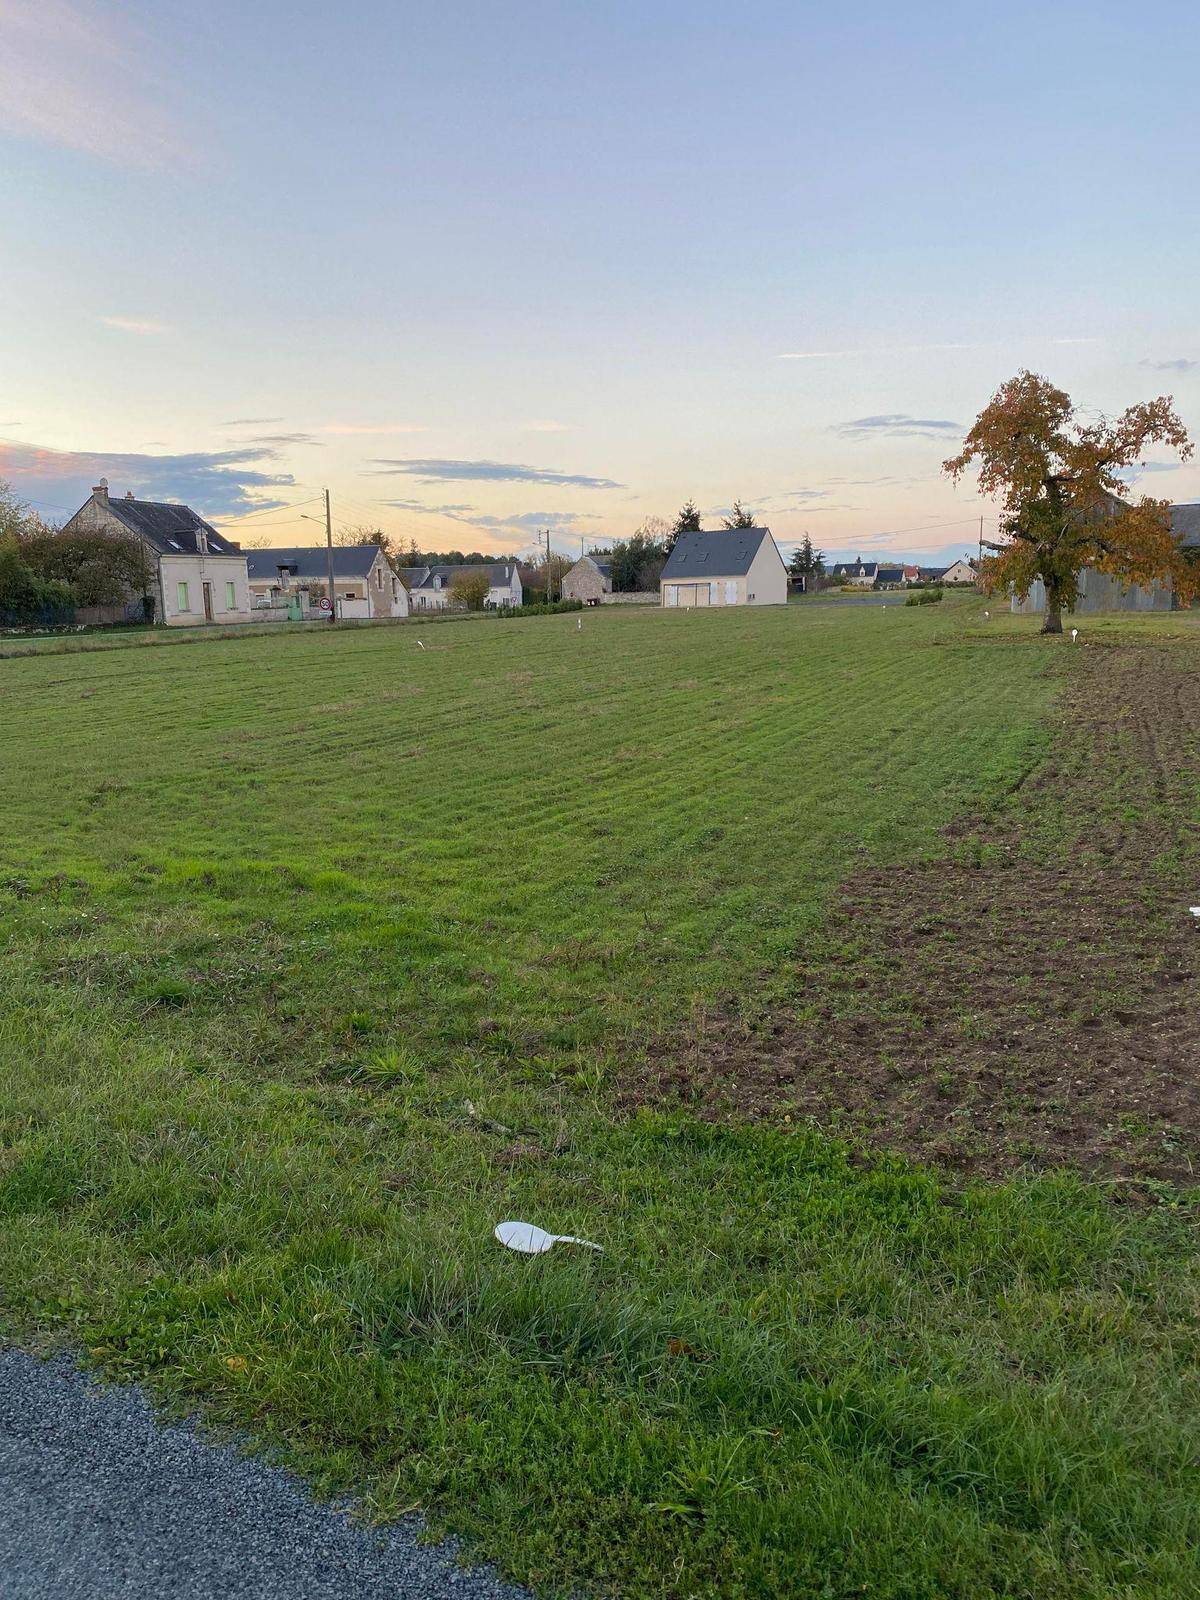 Terrain seul à Fatines en Sarthe (72) de 450 m² à vendre au prix de 45000€ - 2